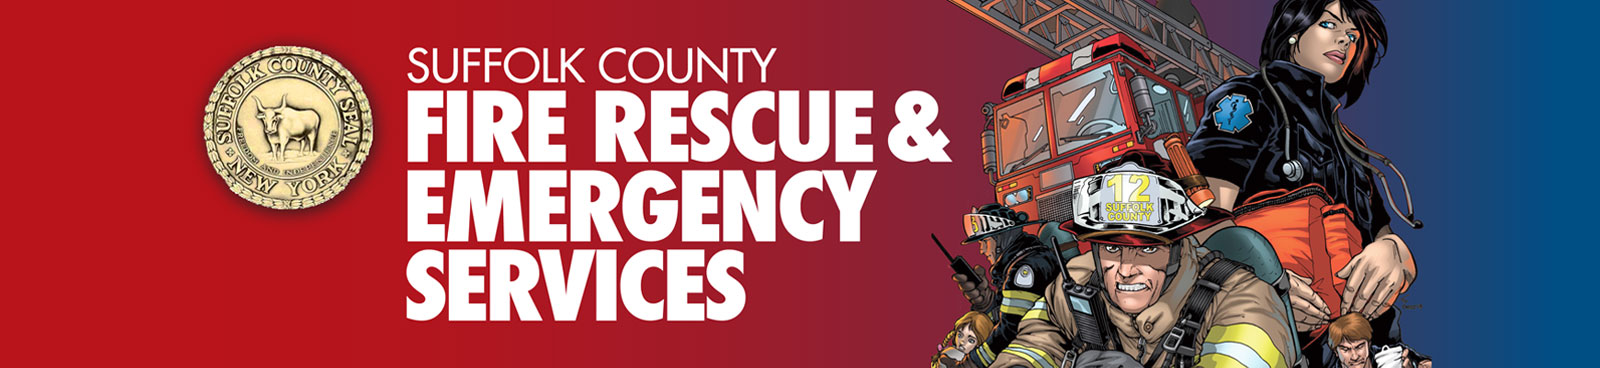 Suffolk County Fire Rescue & Emergency Service Header